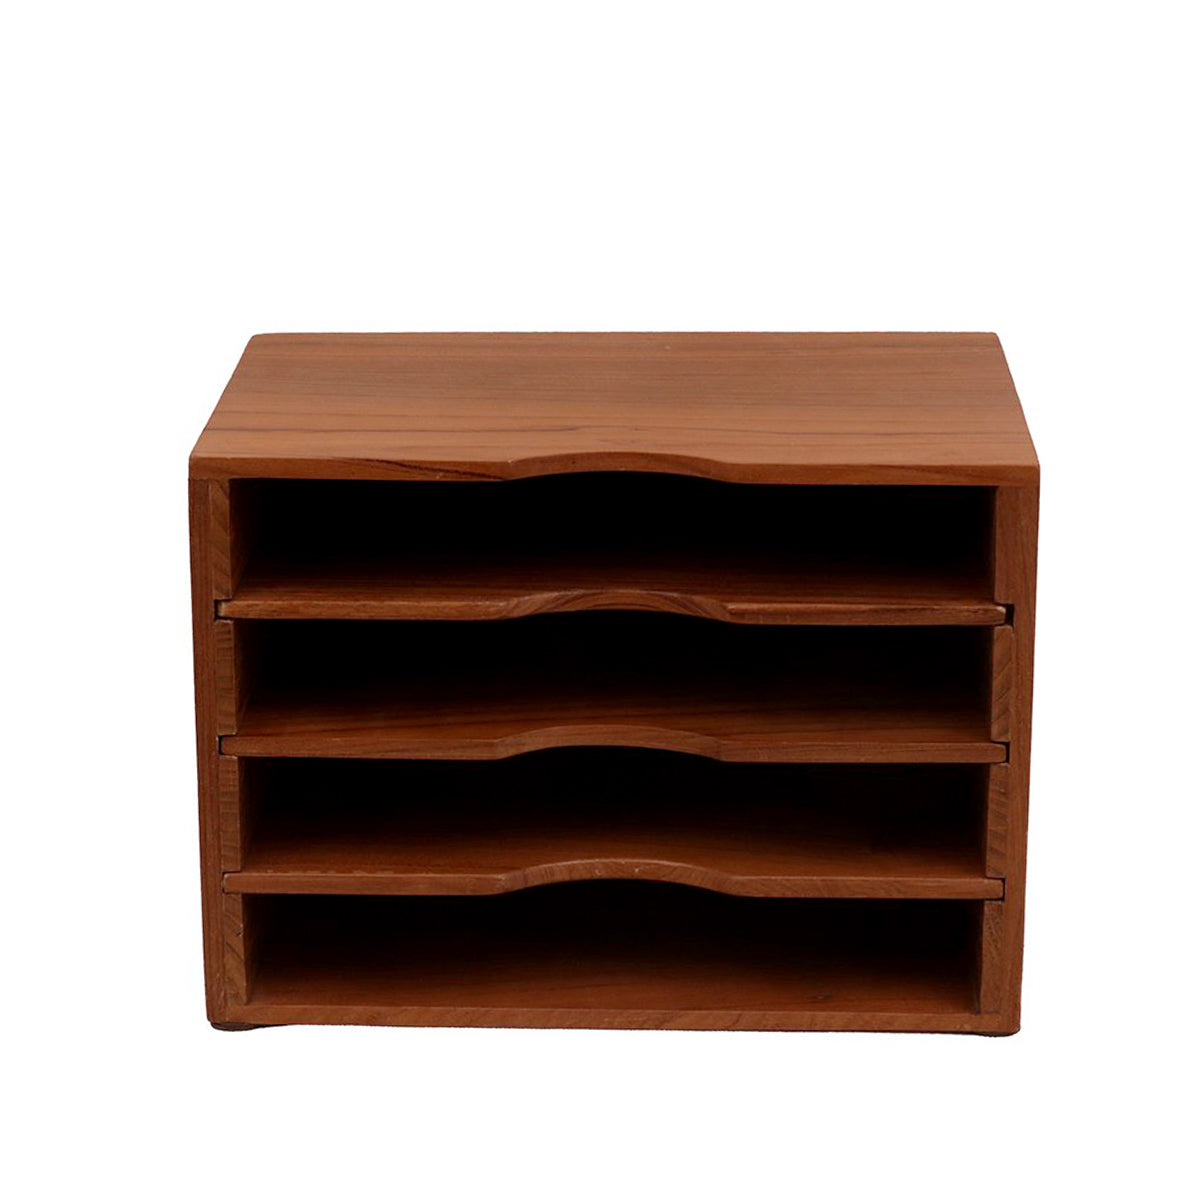 Horizontal Wooden Paper Rack (Natural Tone) Desk Organizer